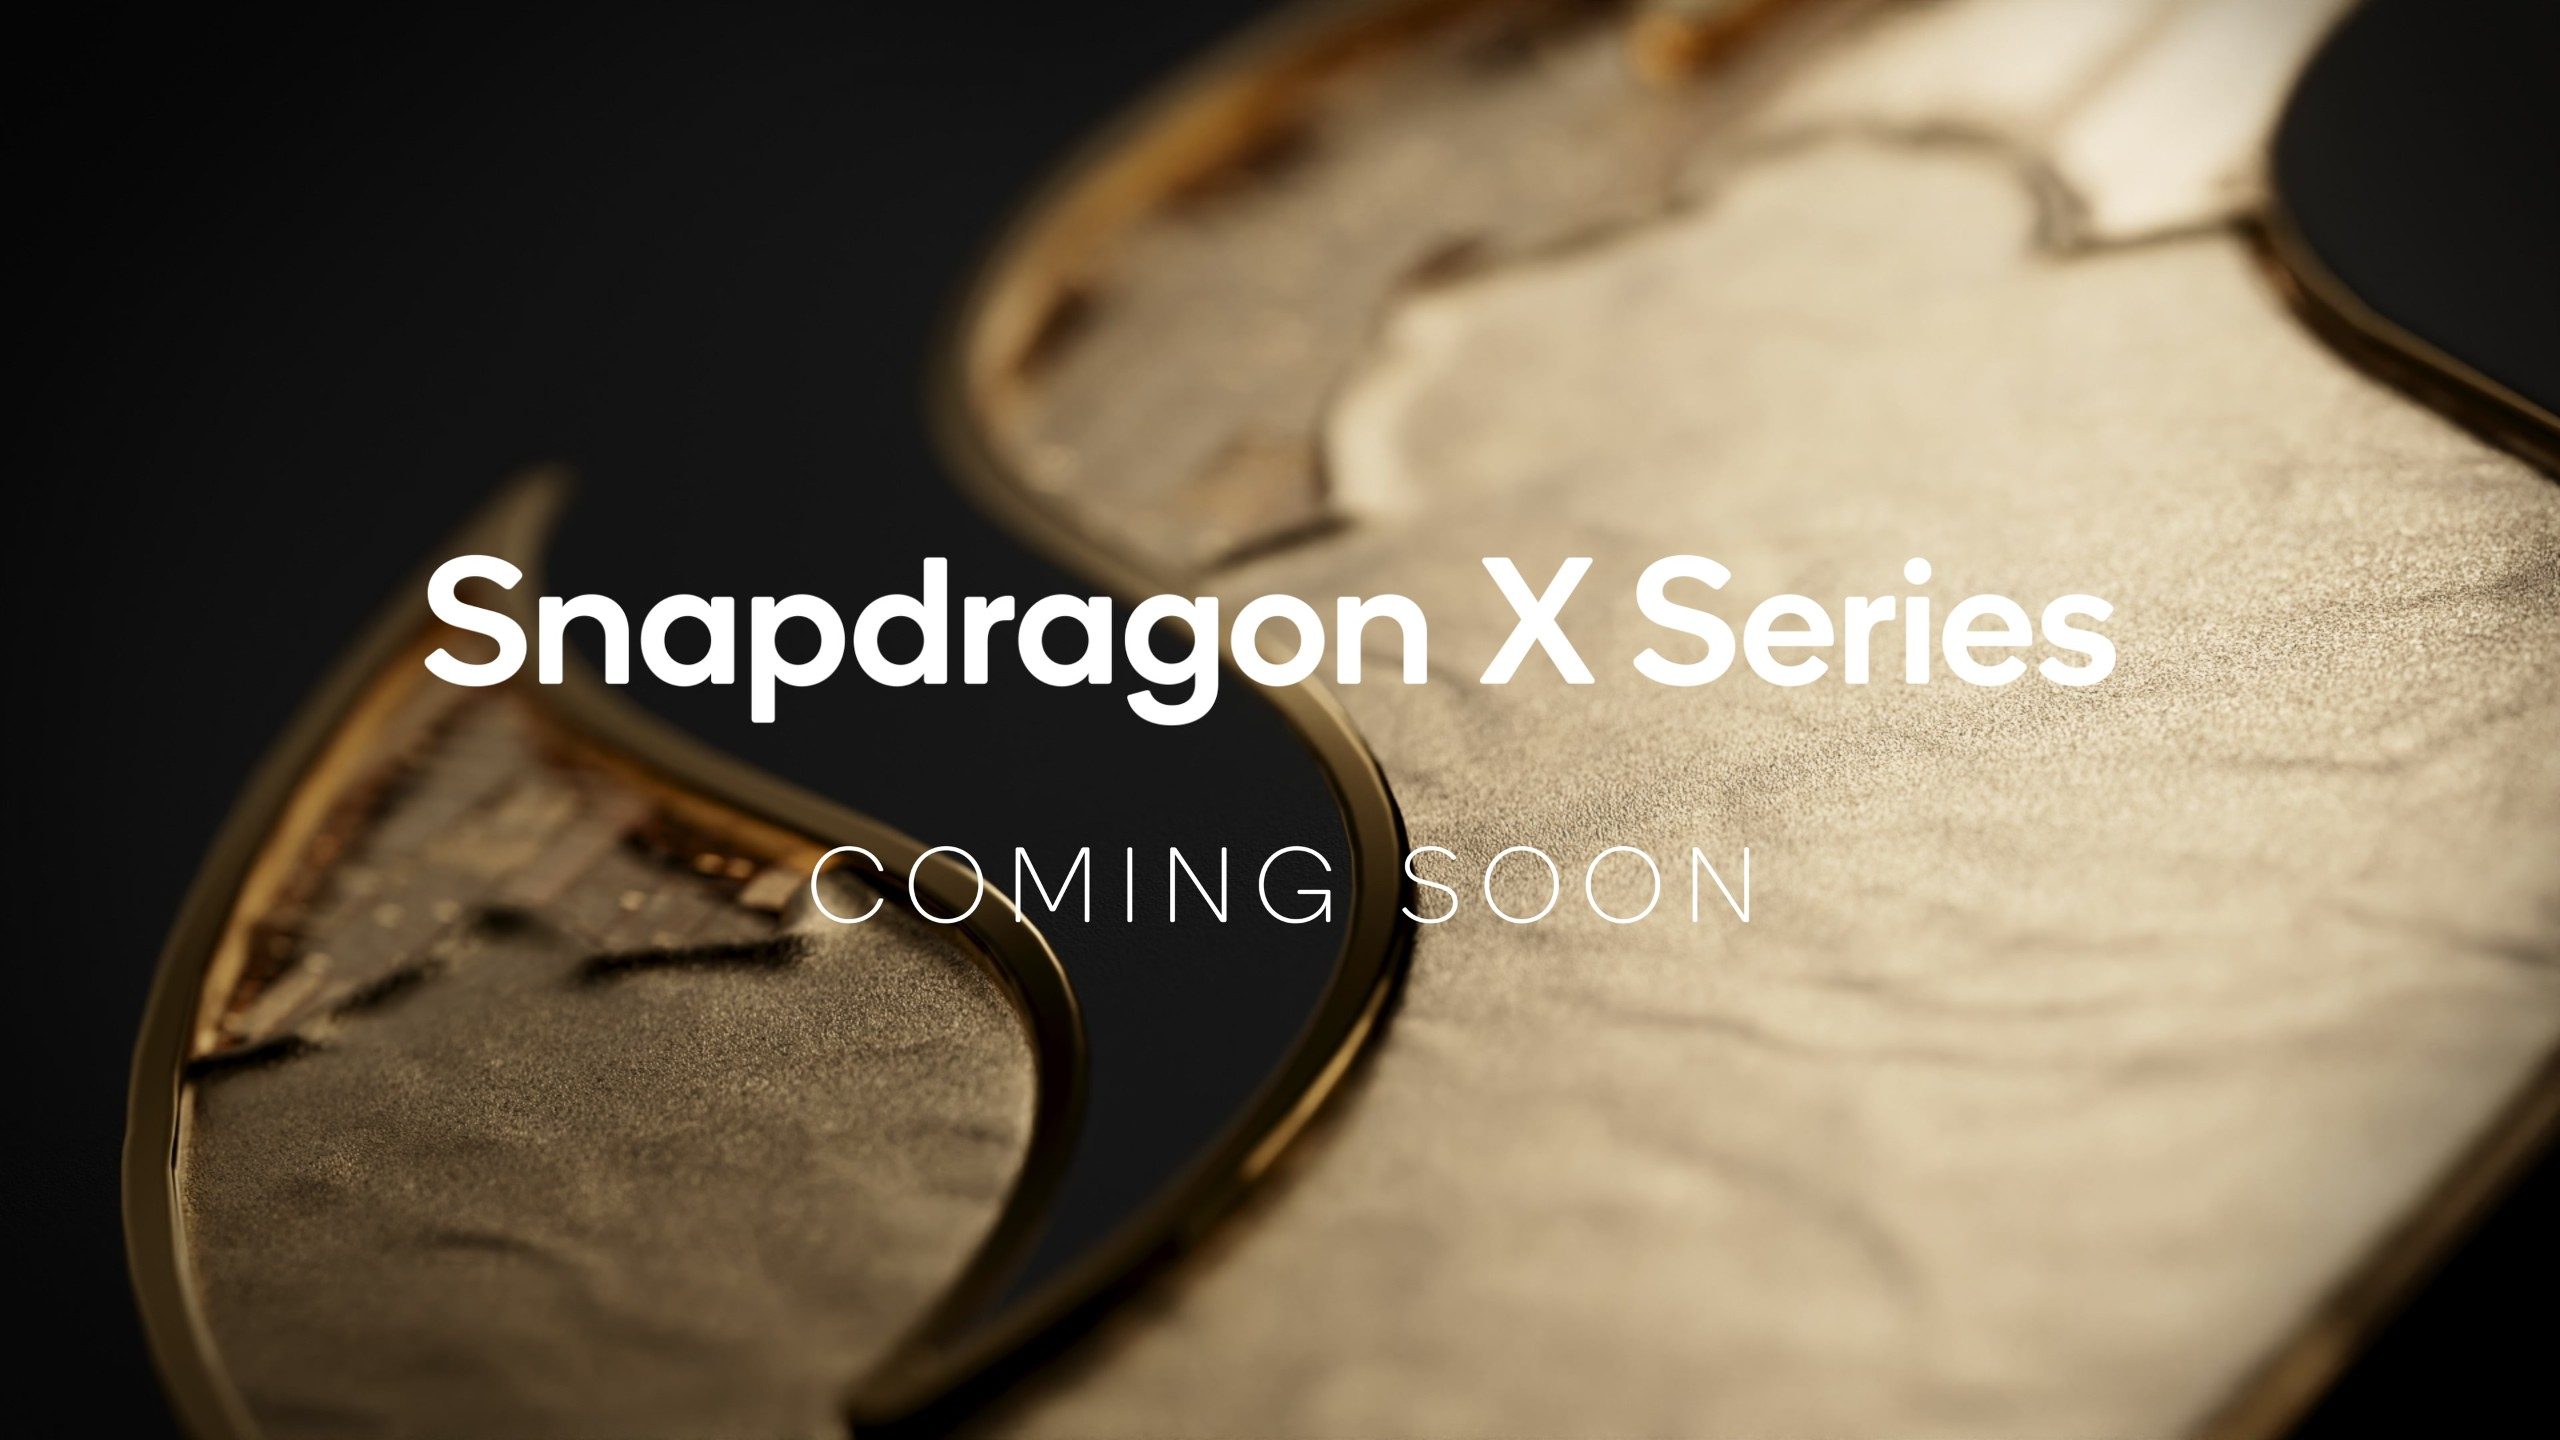 Goldenes Snapdragon-Logo, davor der Text "Snapdragon X Series Coming Soon"